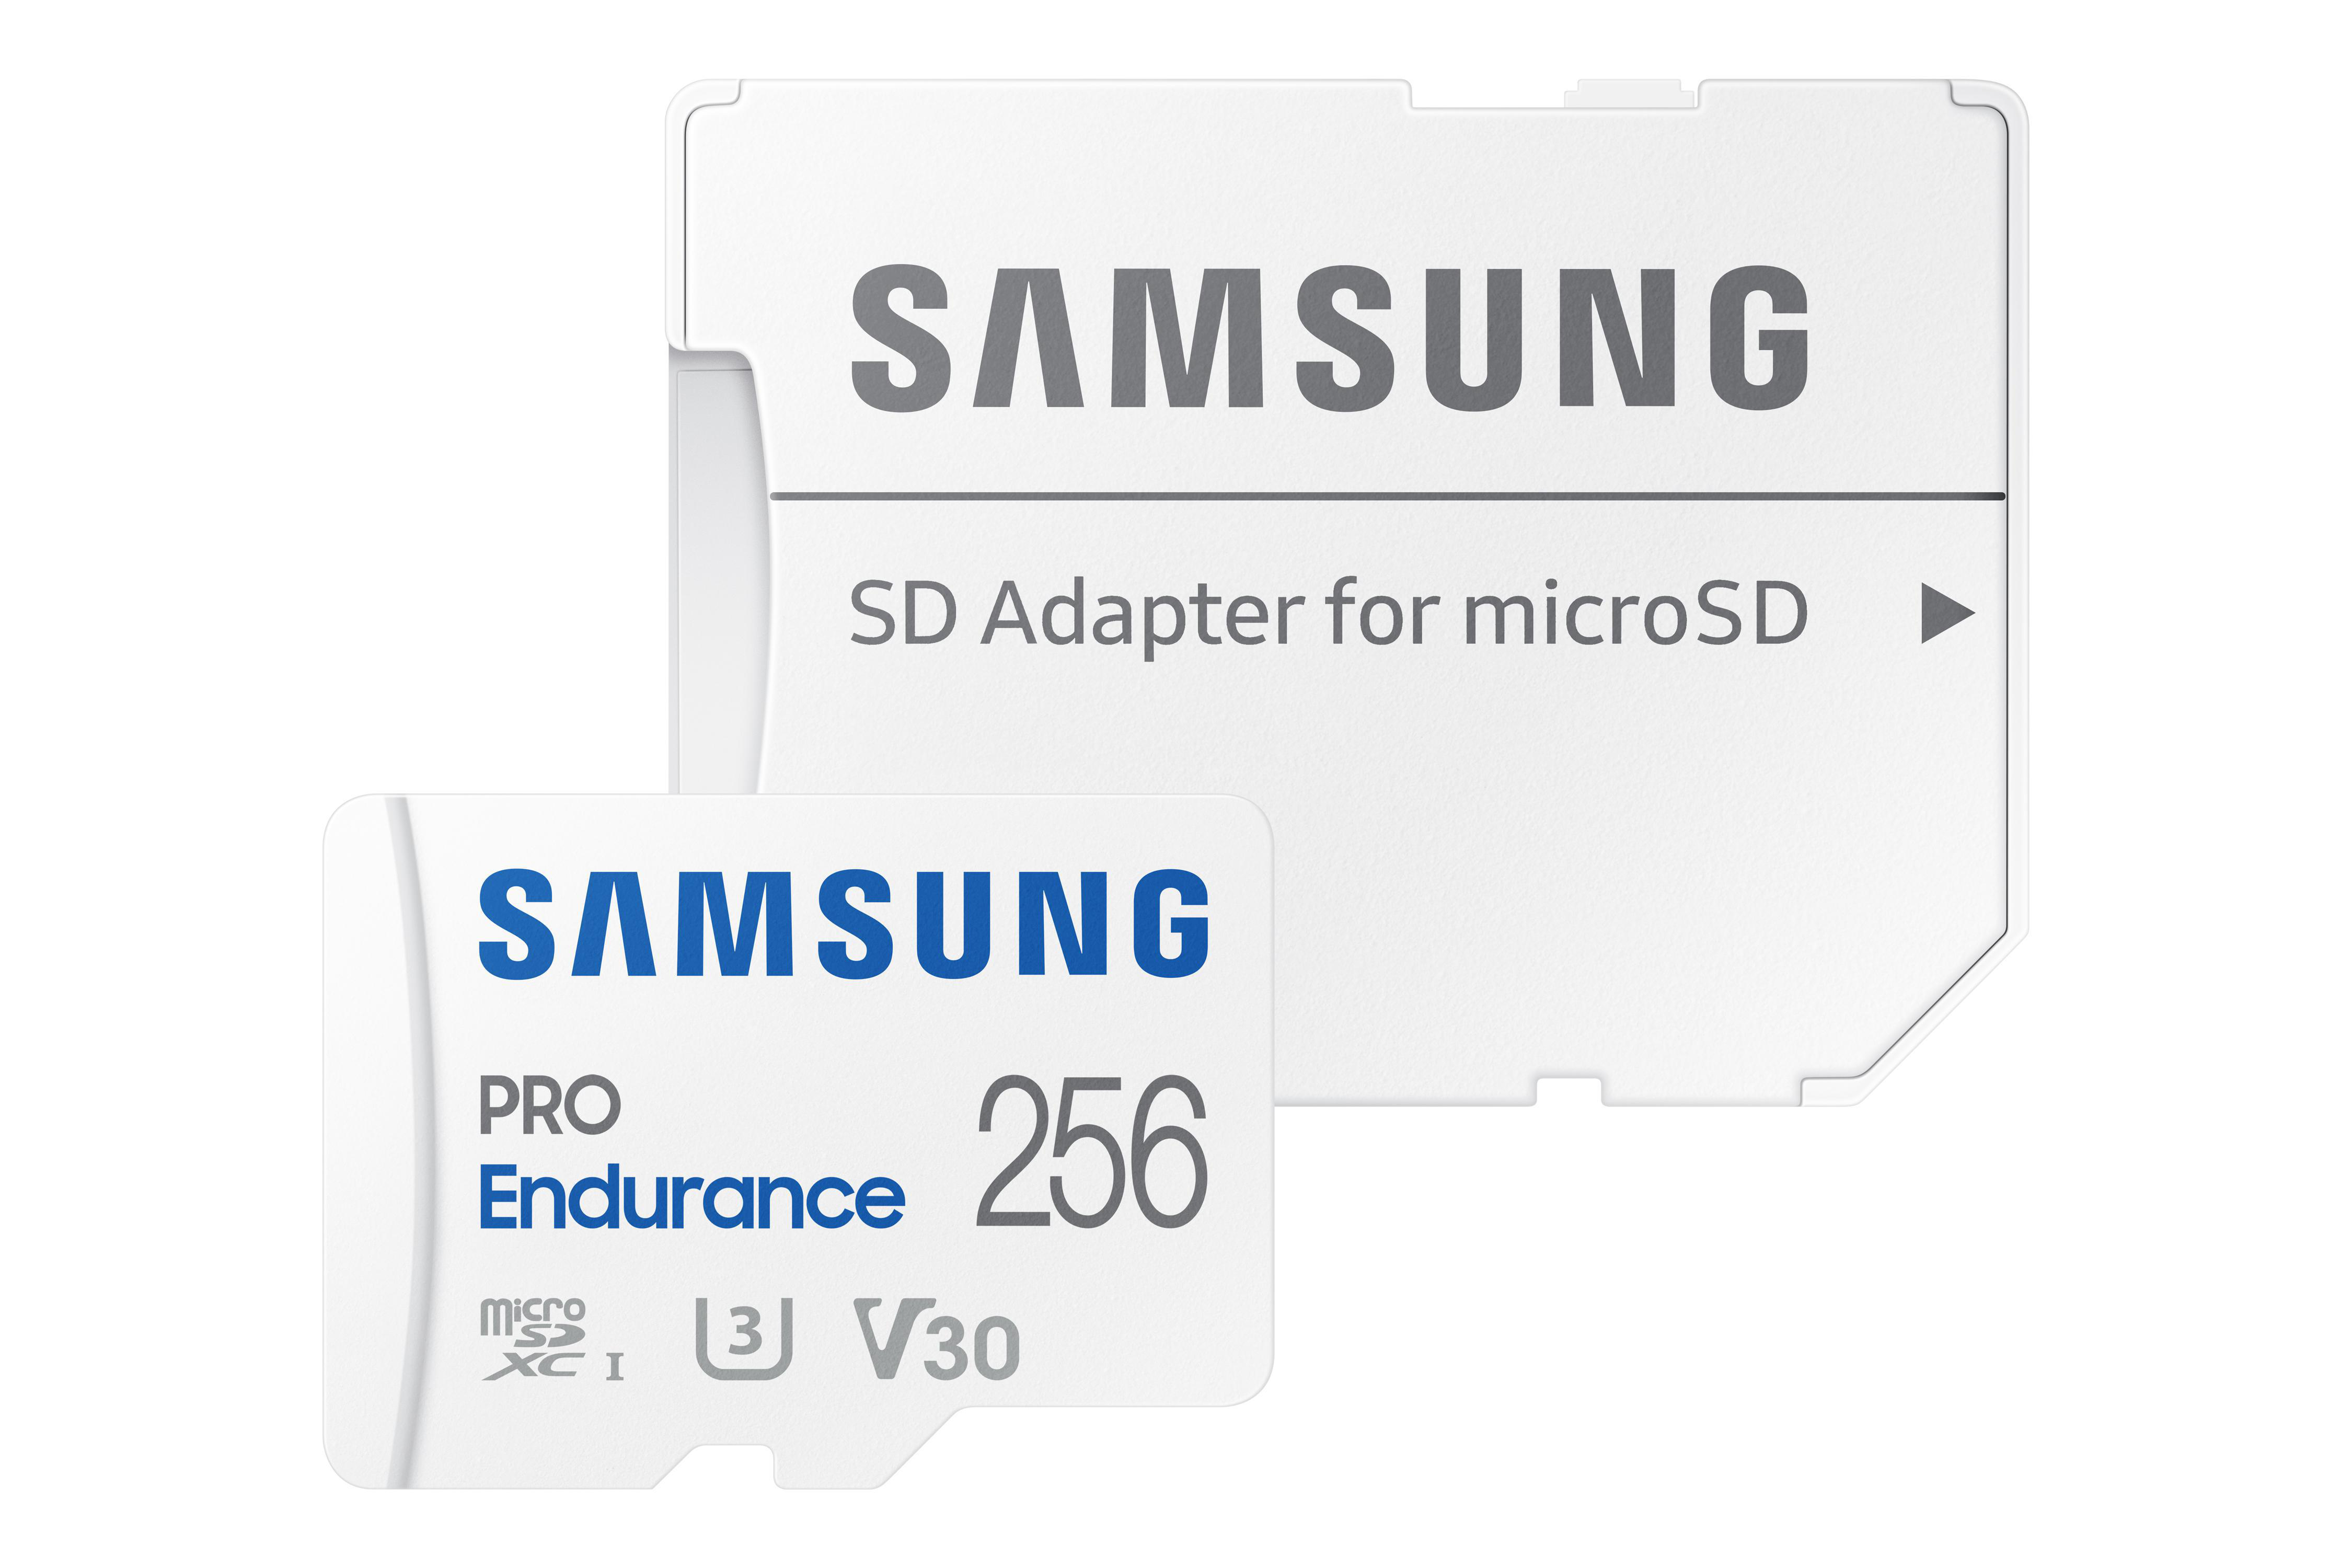 SAMSUNG PRO Endurance MB/s GB, 256 100 (2022), Micro-SDXC Speicherkarte